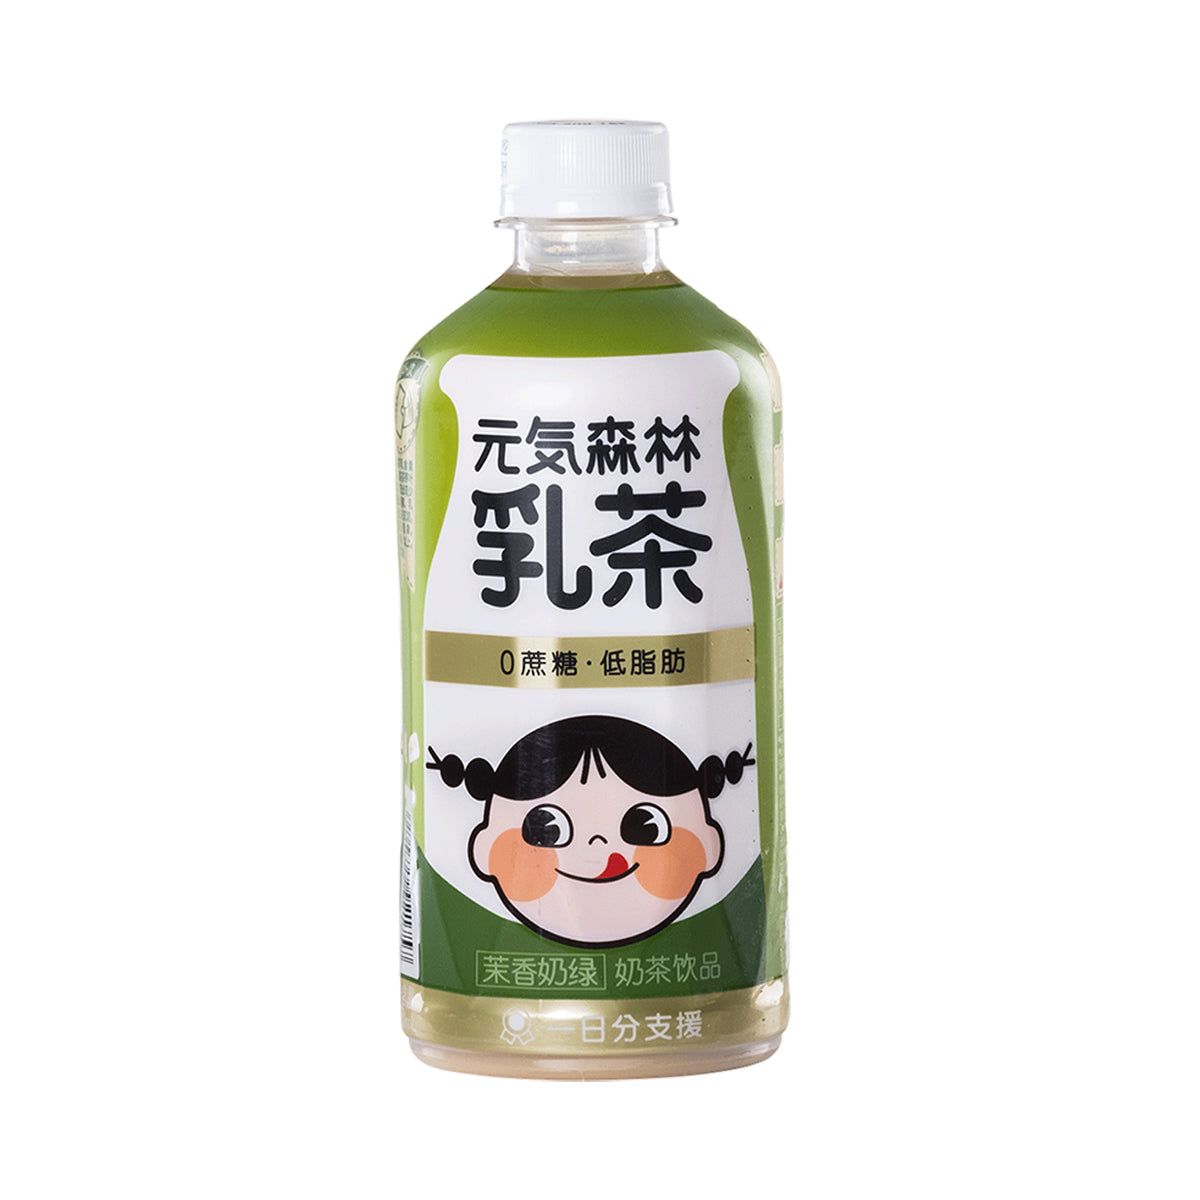 Genki Forest Milk Tea Jasmine Flavor - 450ml